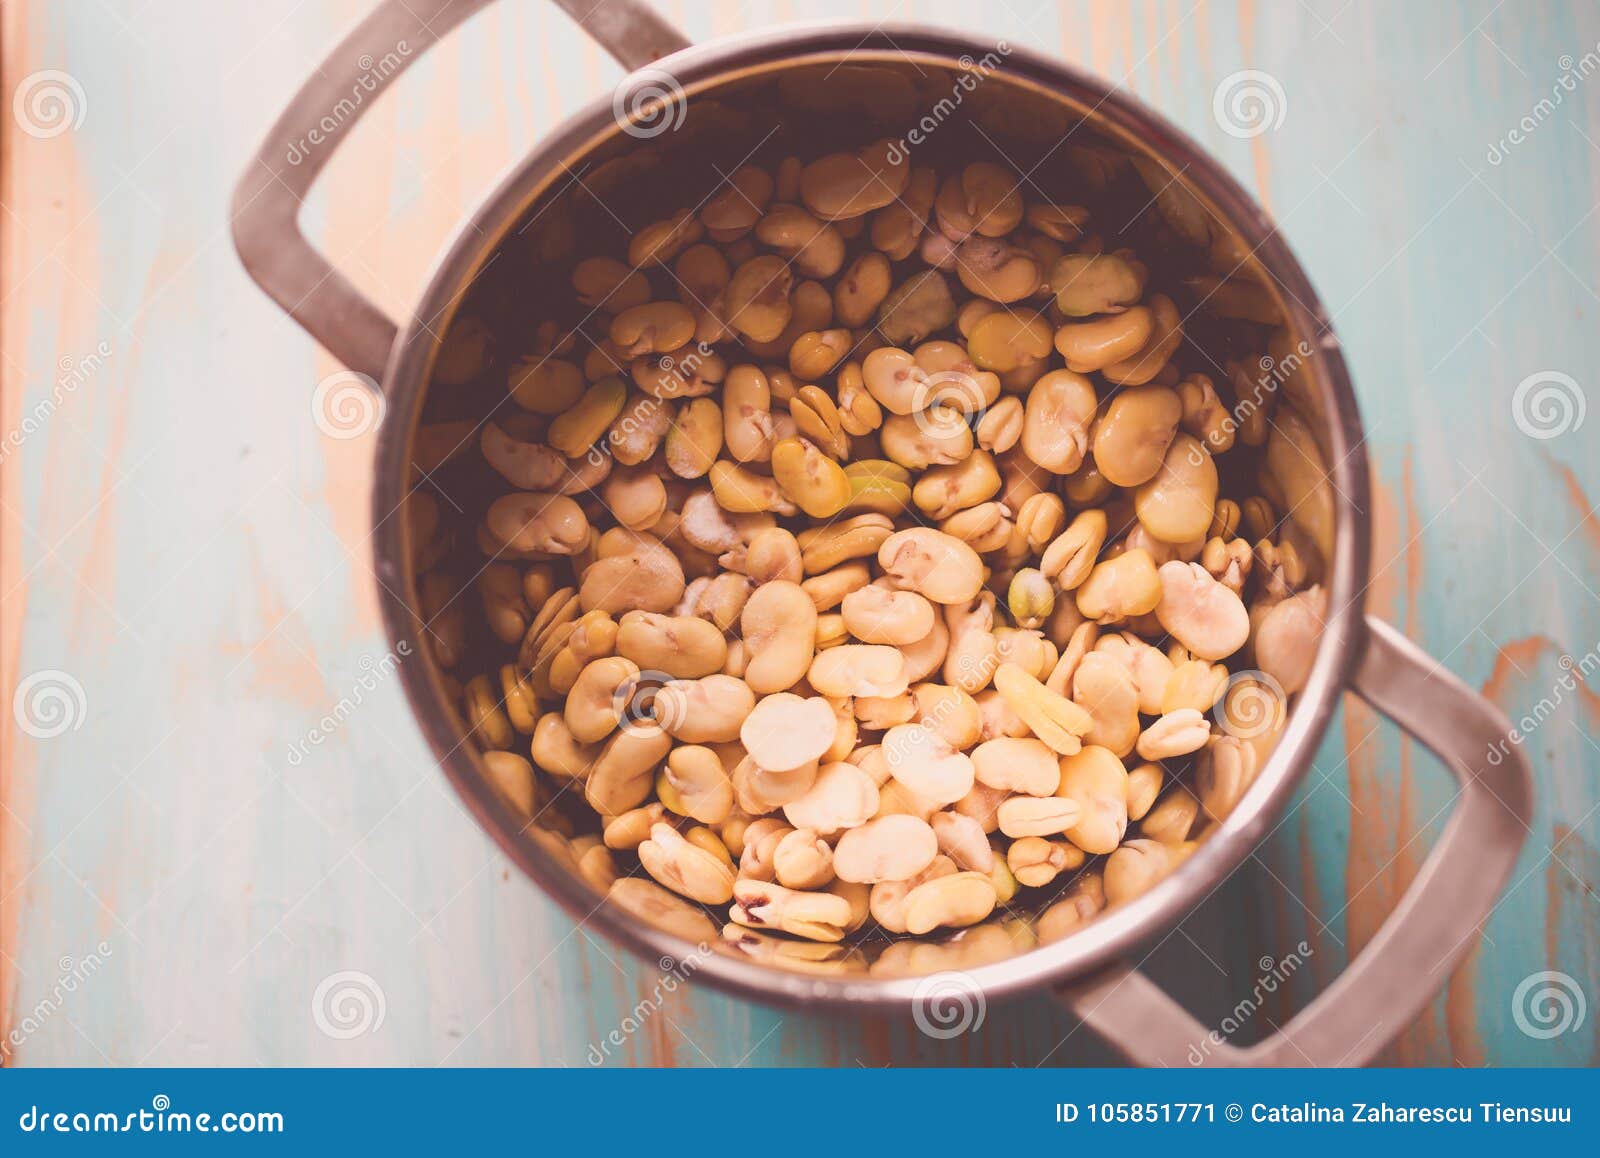 cleaned fava beans